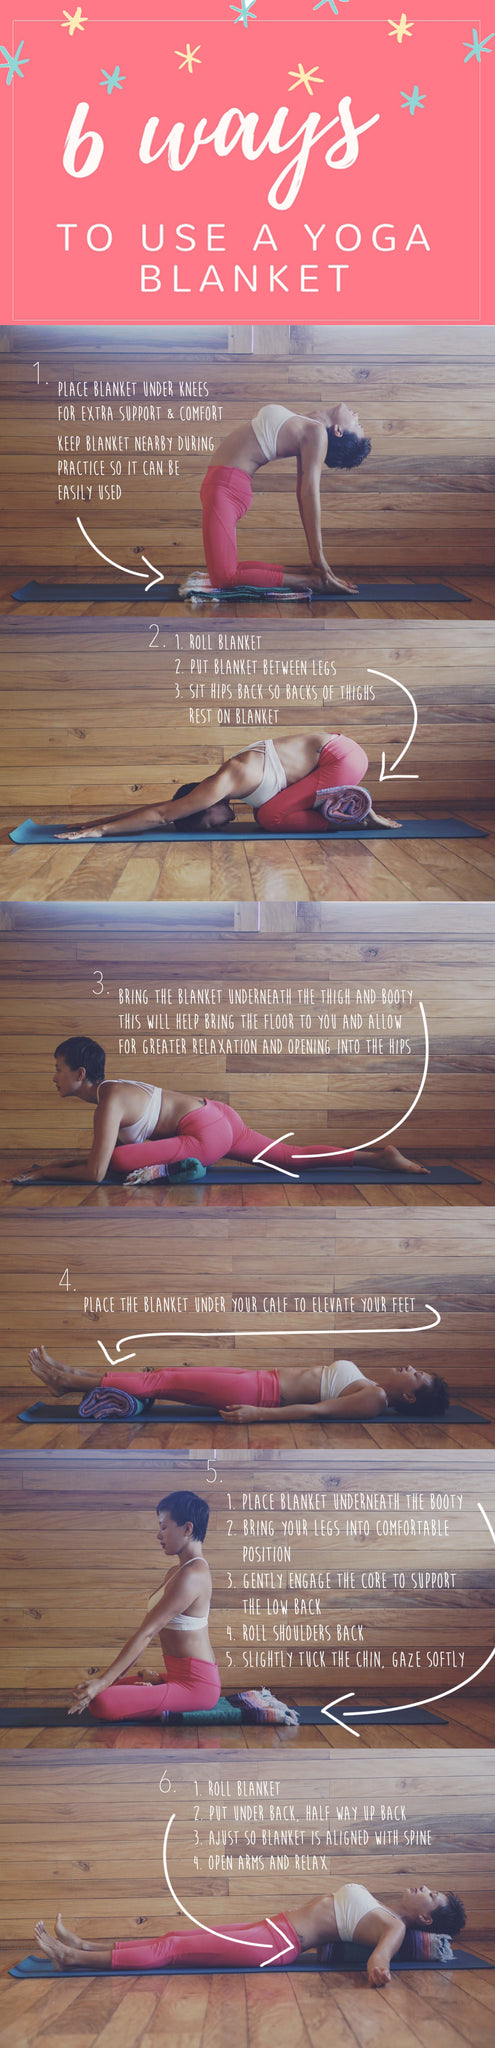 How to Use a Yoga Blanket: 6 Ways to Use It Like True Yogi – West Path